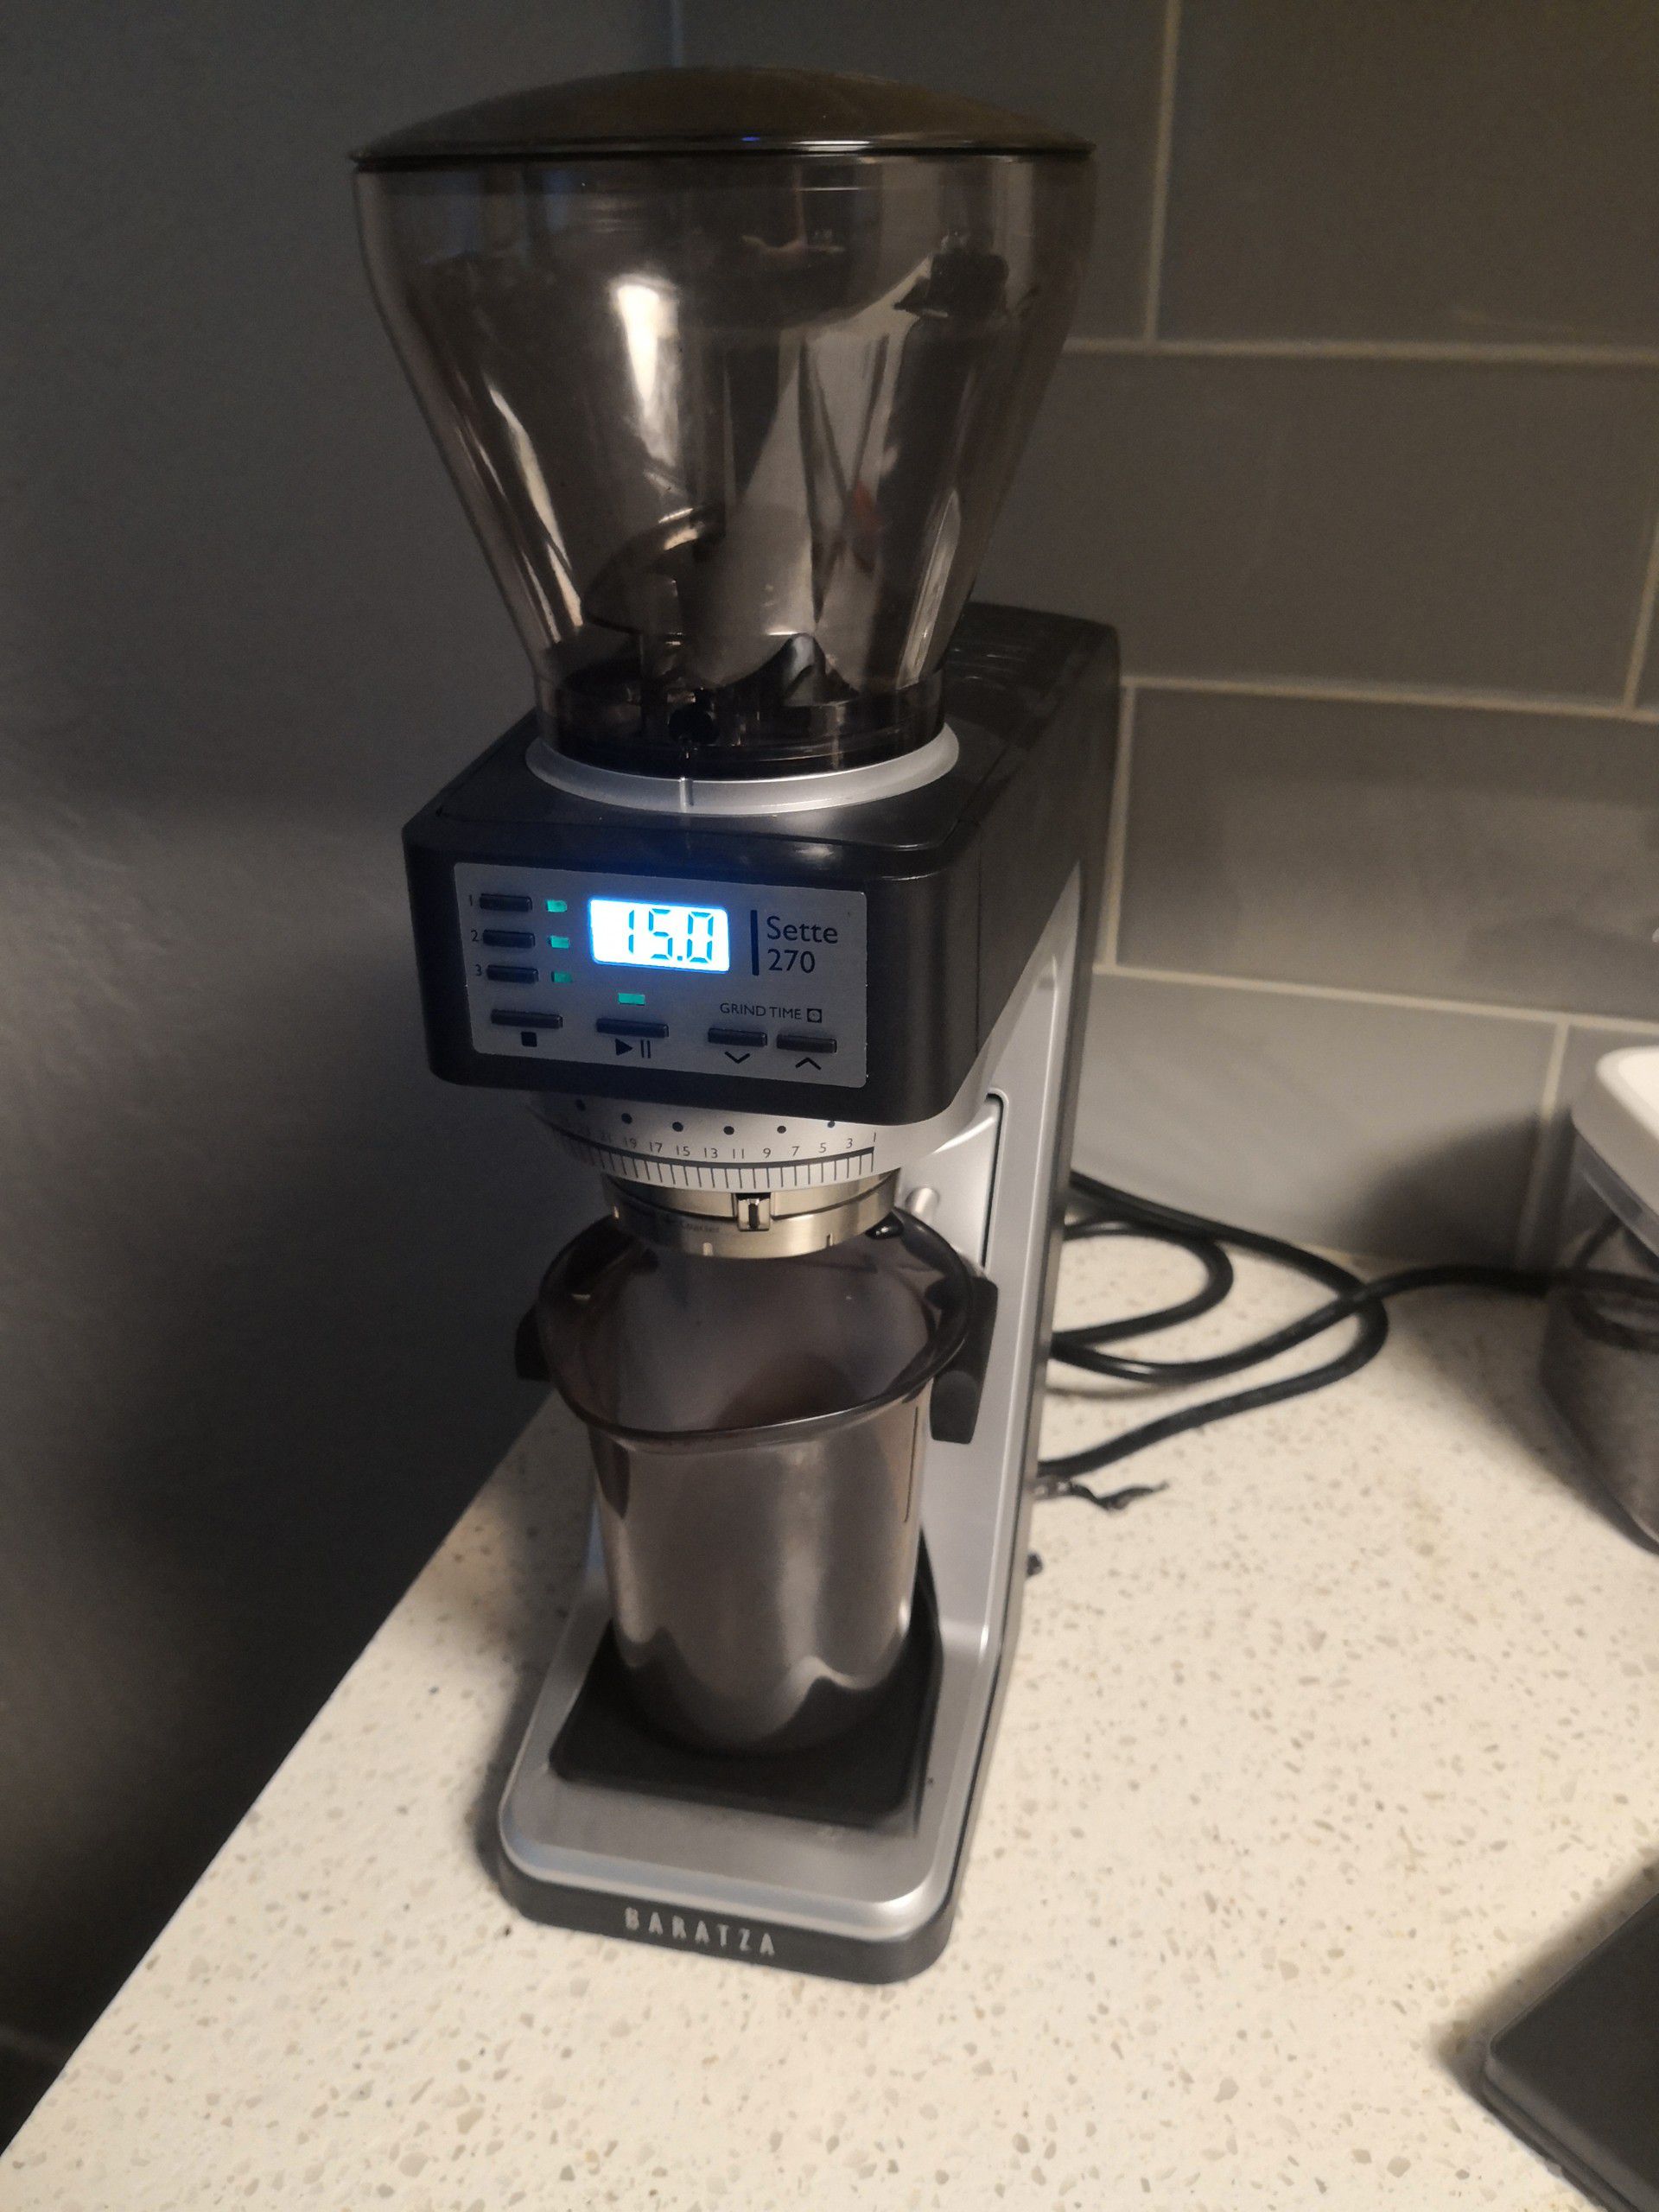 Baratza Sette 270 espresso grinder